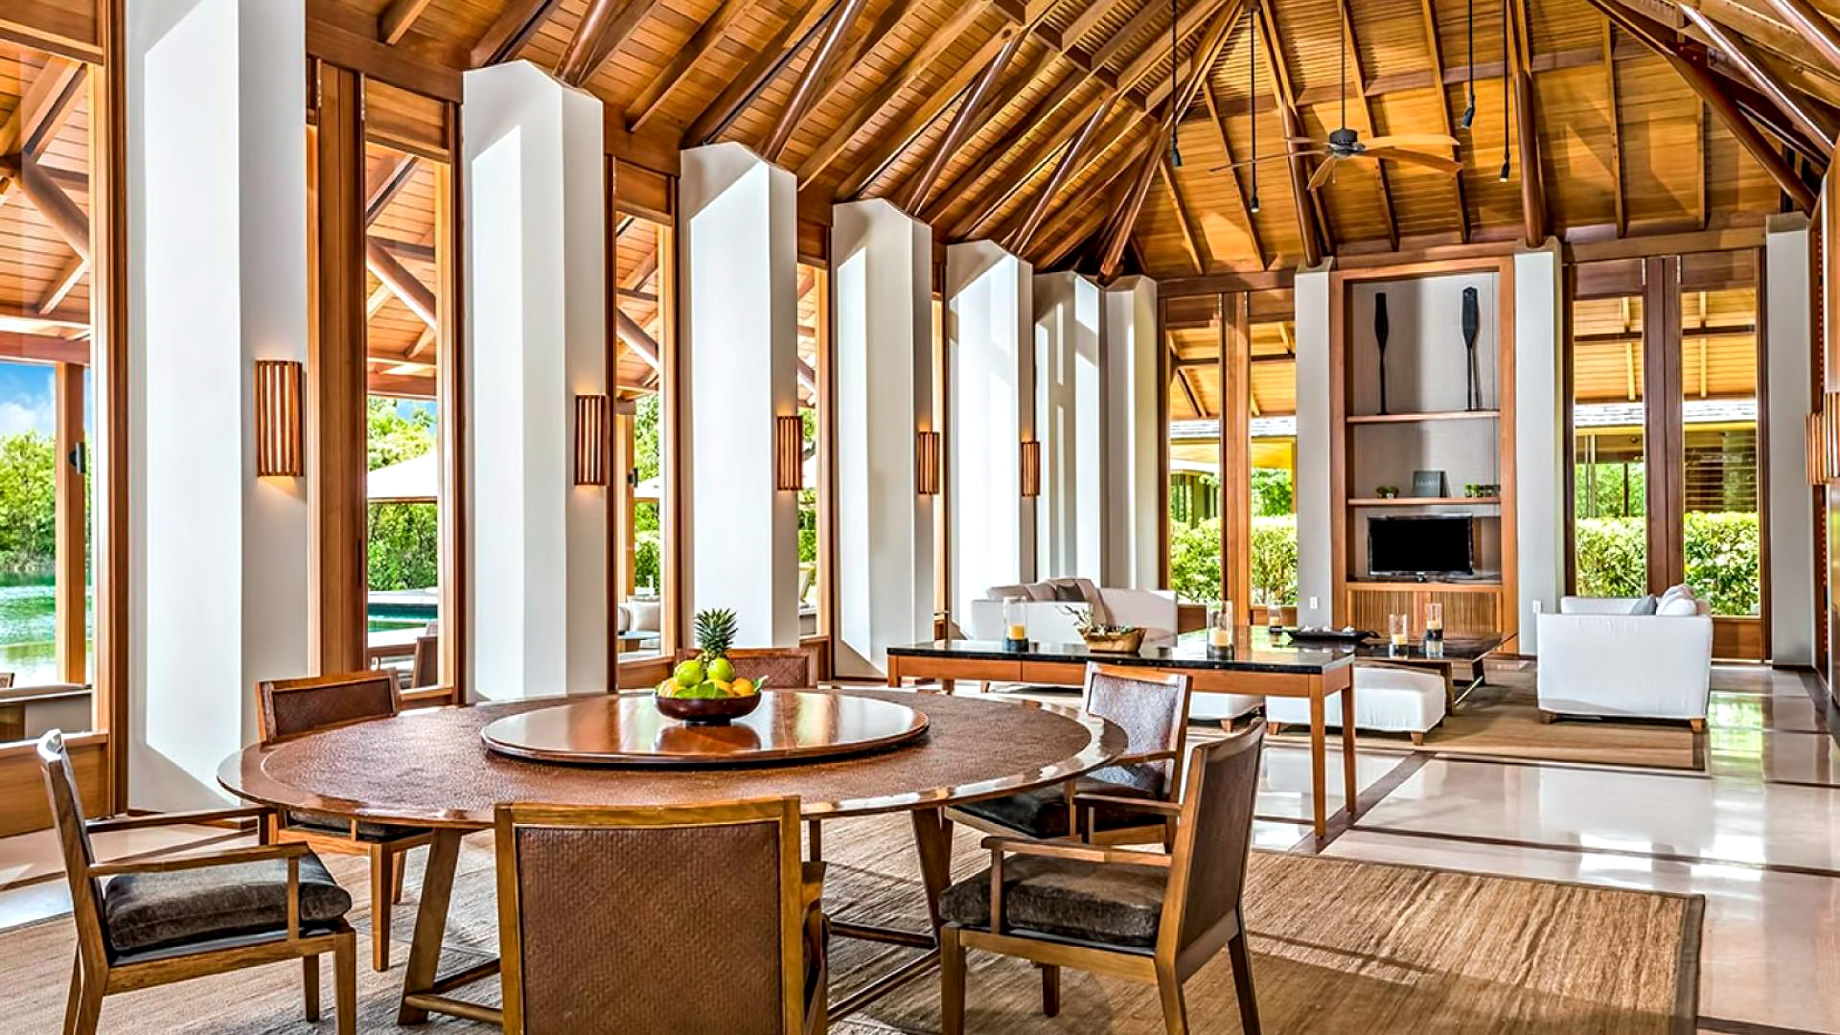 Amanyara Resort - Providenciales, Turks and Caicos Islands - 3 Bedroom Tranquility Villa Dining Living Room